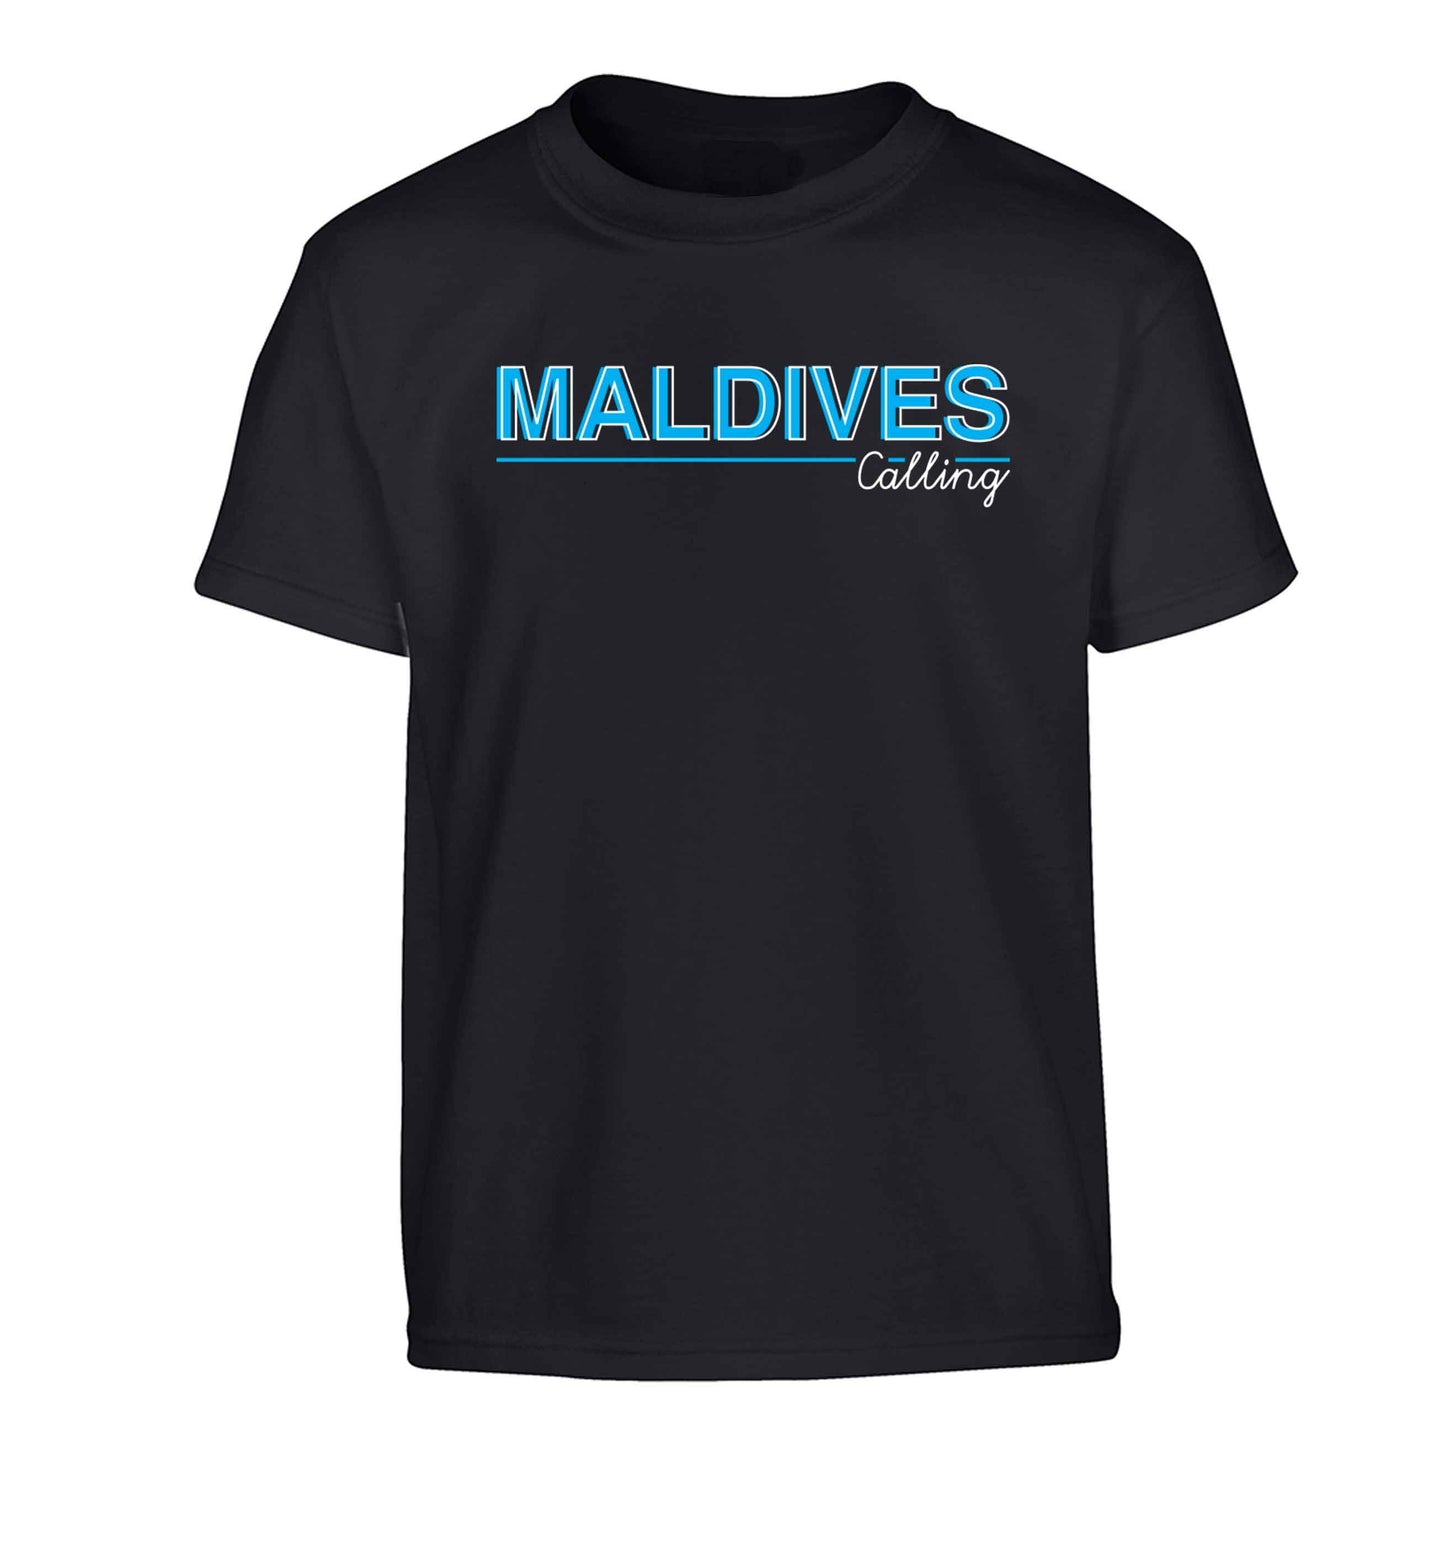 Maldives calling Children's black Tshirt 12-13 Years